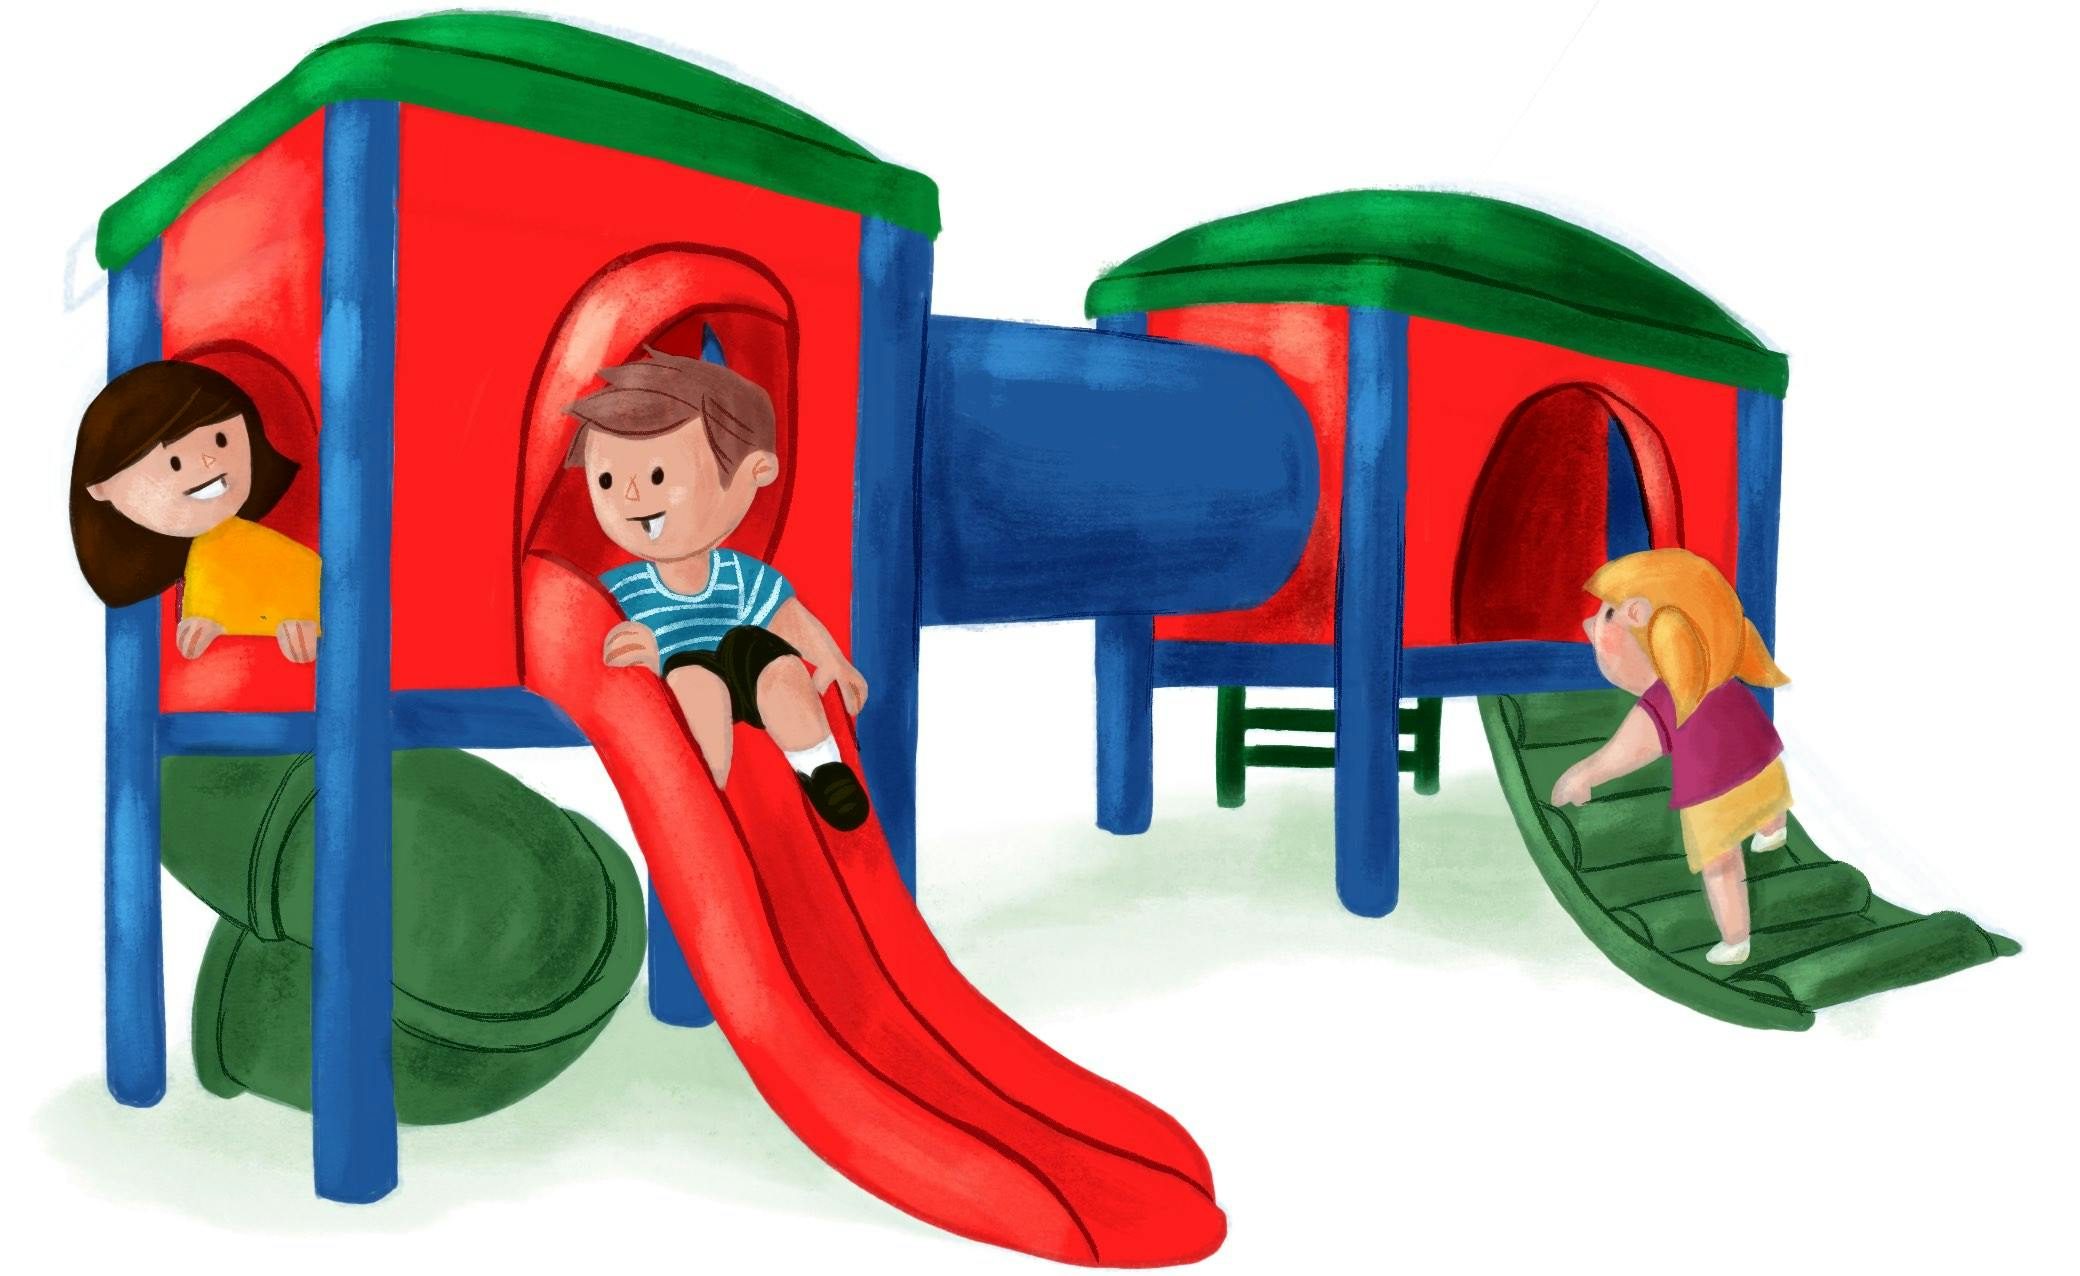 Illustration of "Playground"